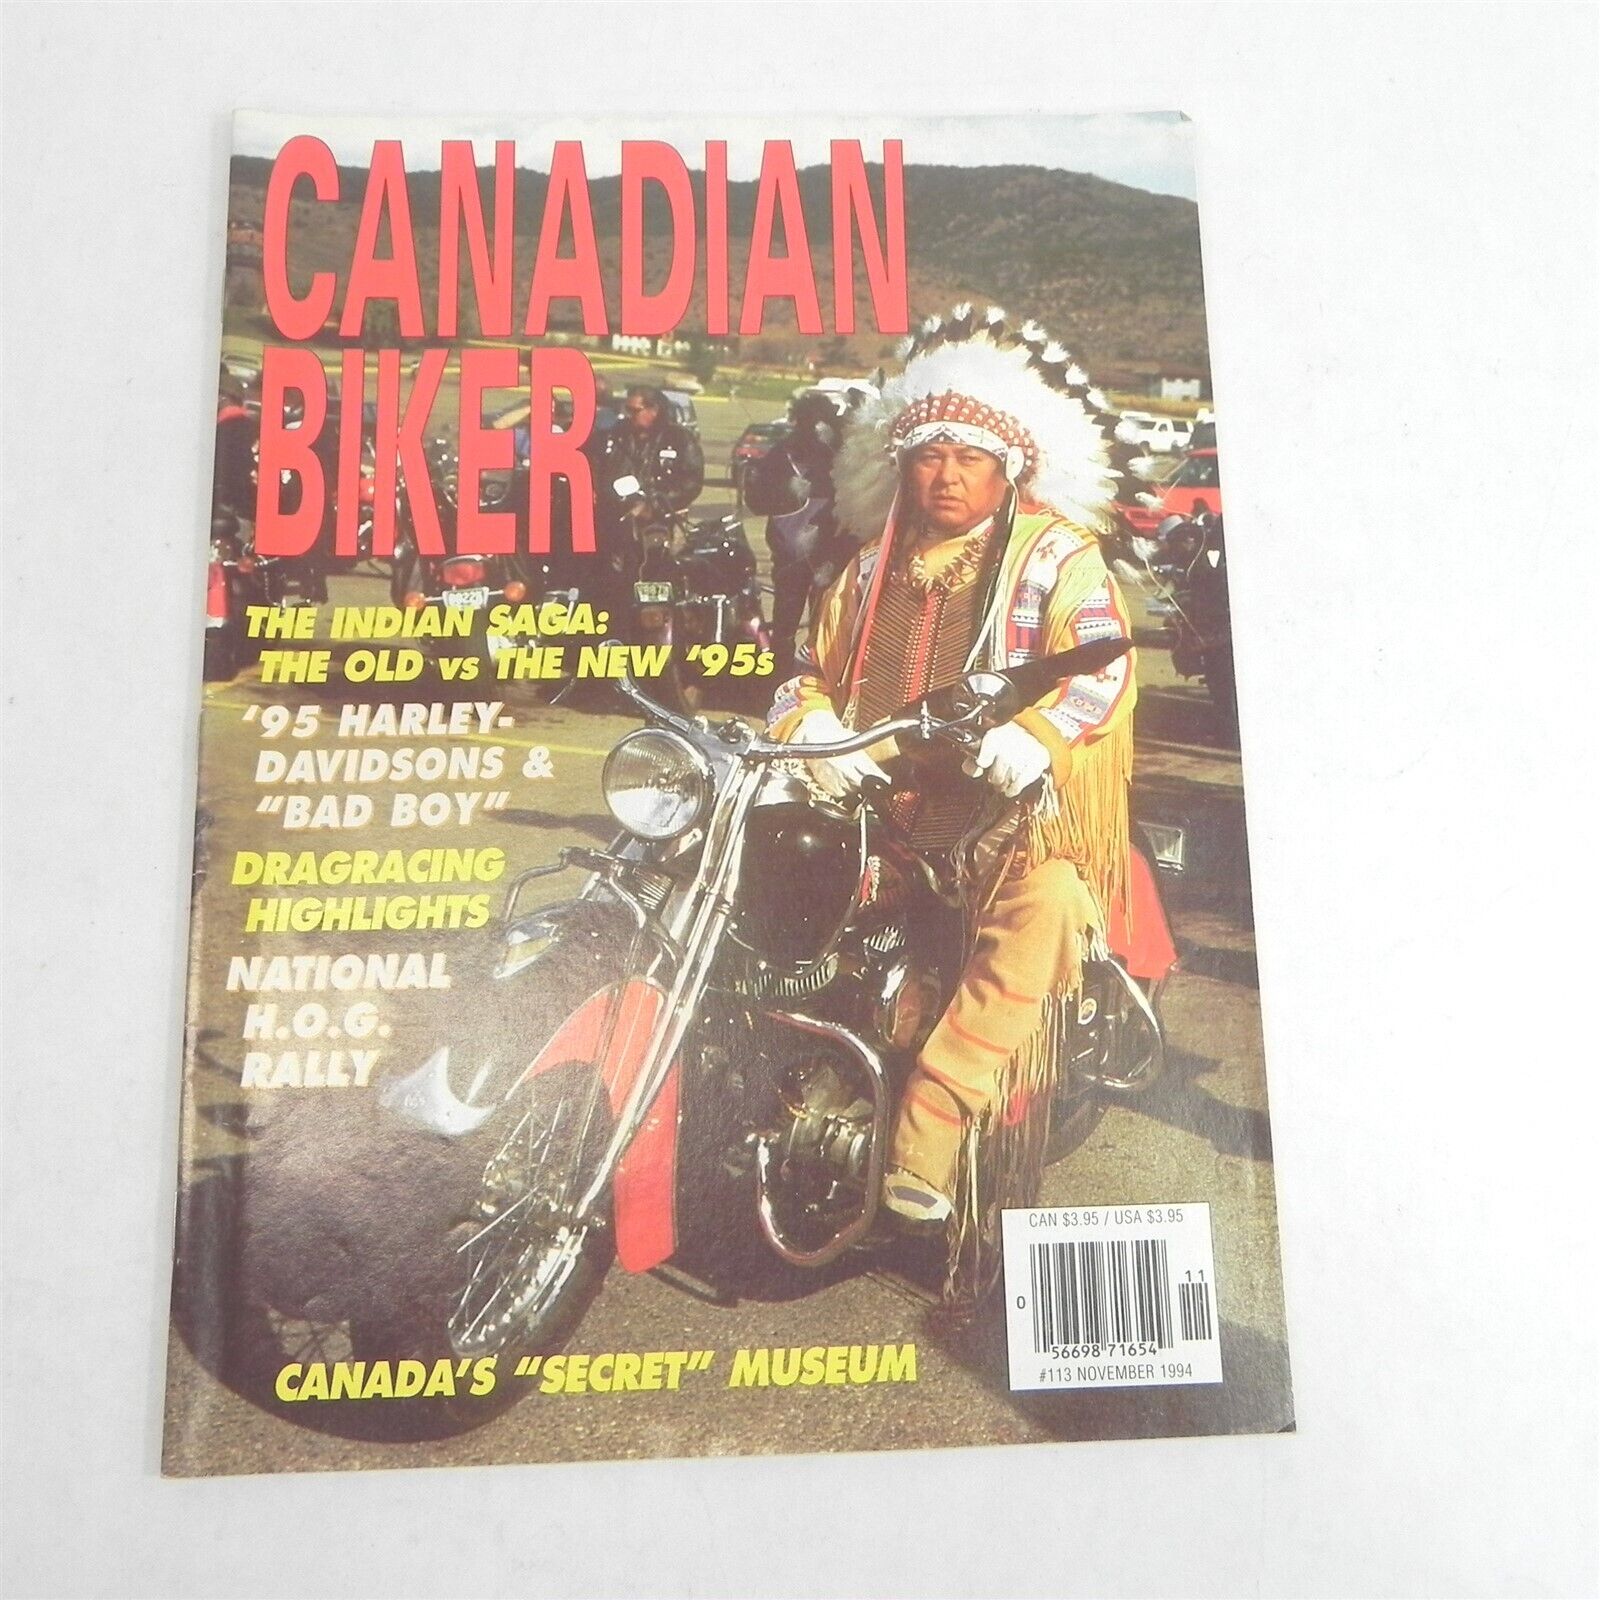 VINTAGE CANADIAN BIKER MOTORCYCLE MAGAZINE SINGLE ISSUE NOVEMBER 1994 #113